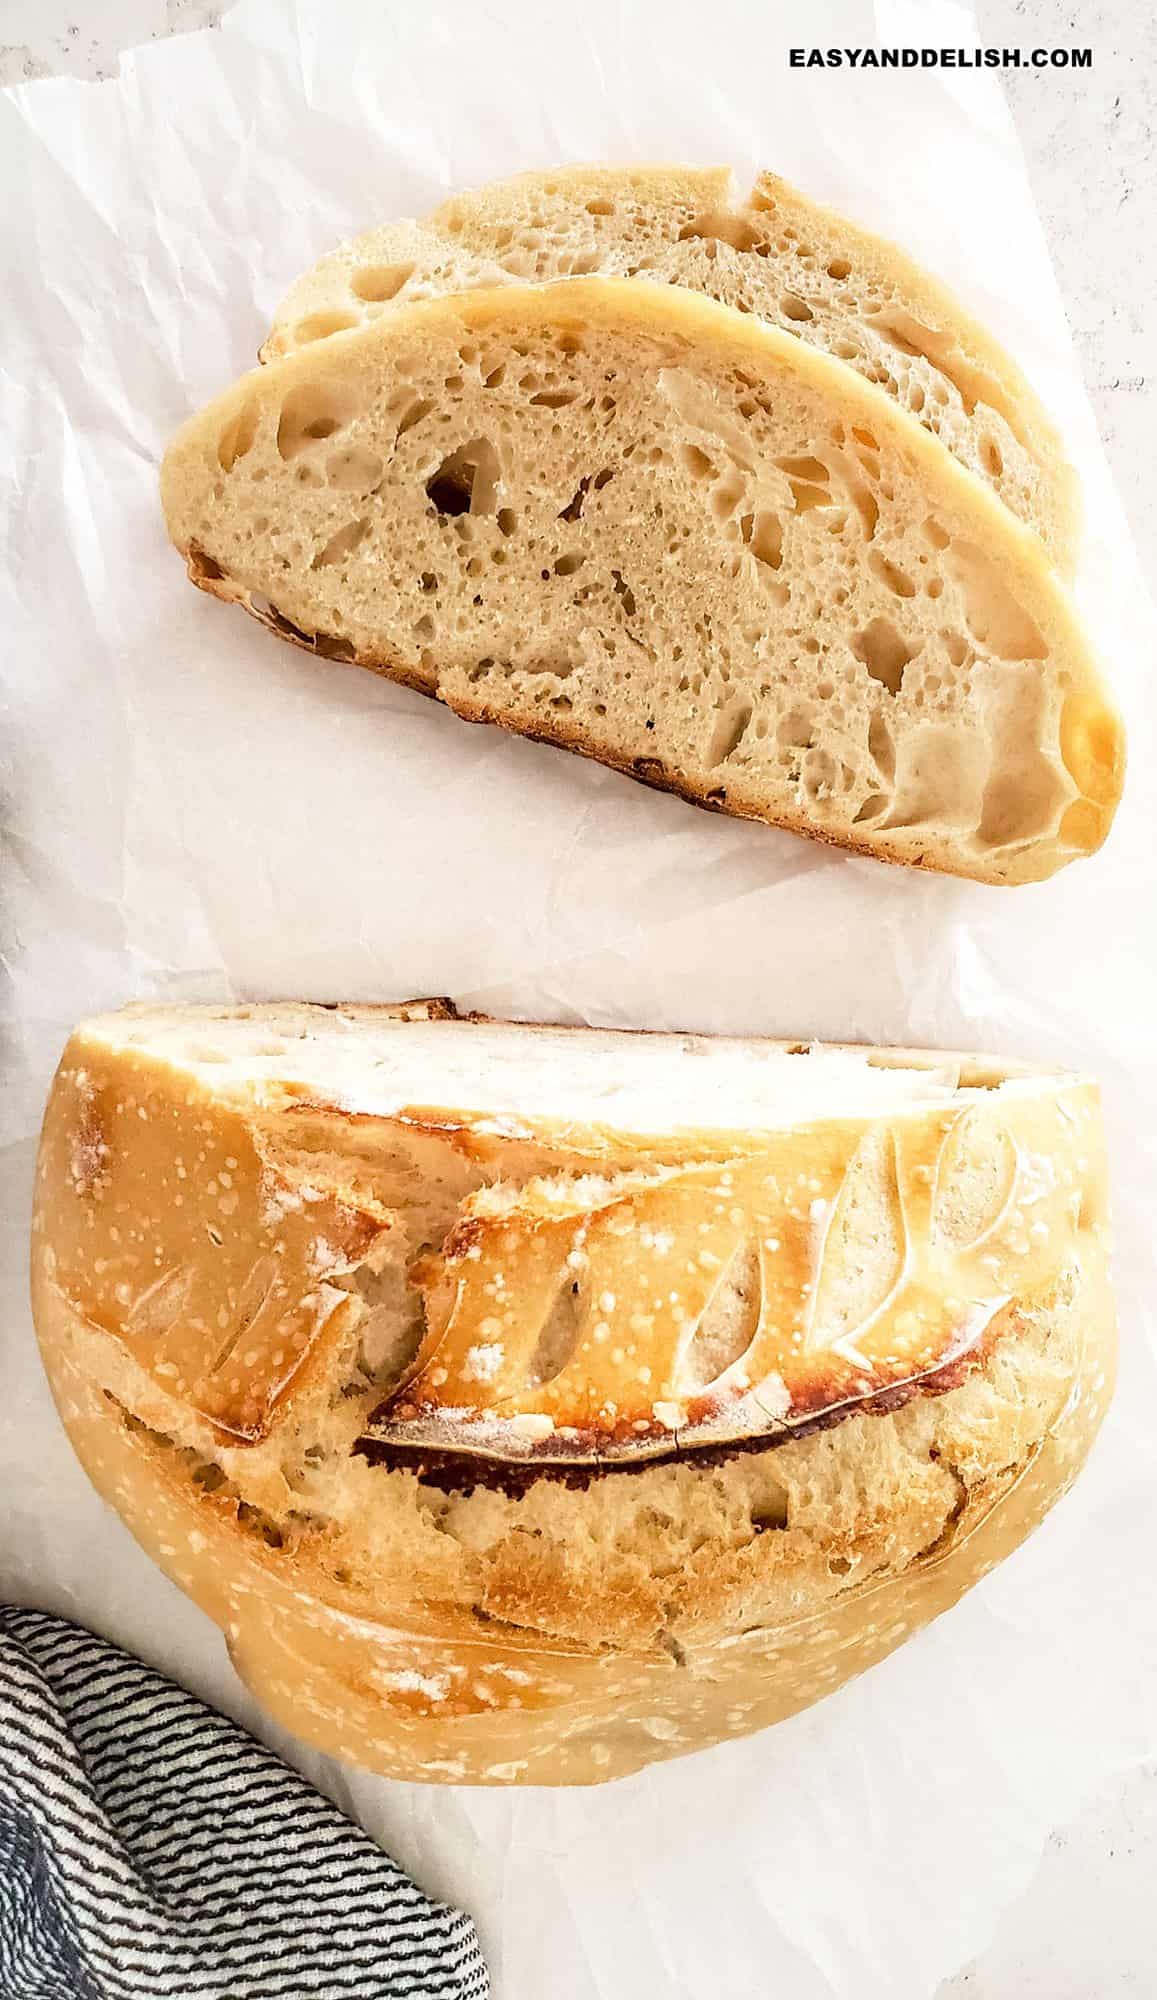 https://www.easyanddelish.com/wp-content/uploads/2022/11/Sourdough-bread-partially-sliced.jpg